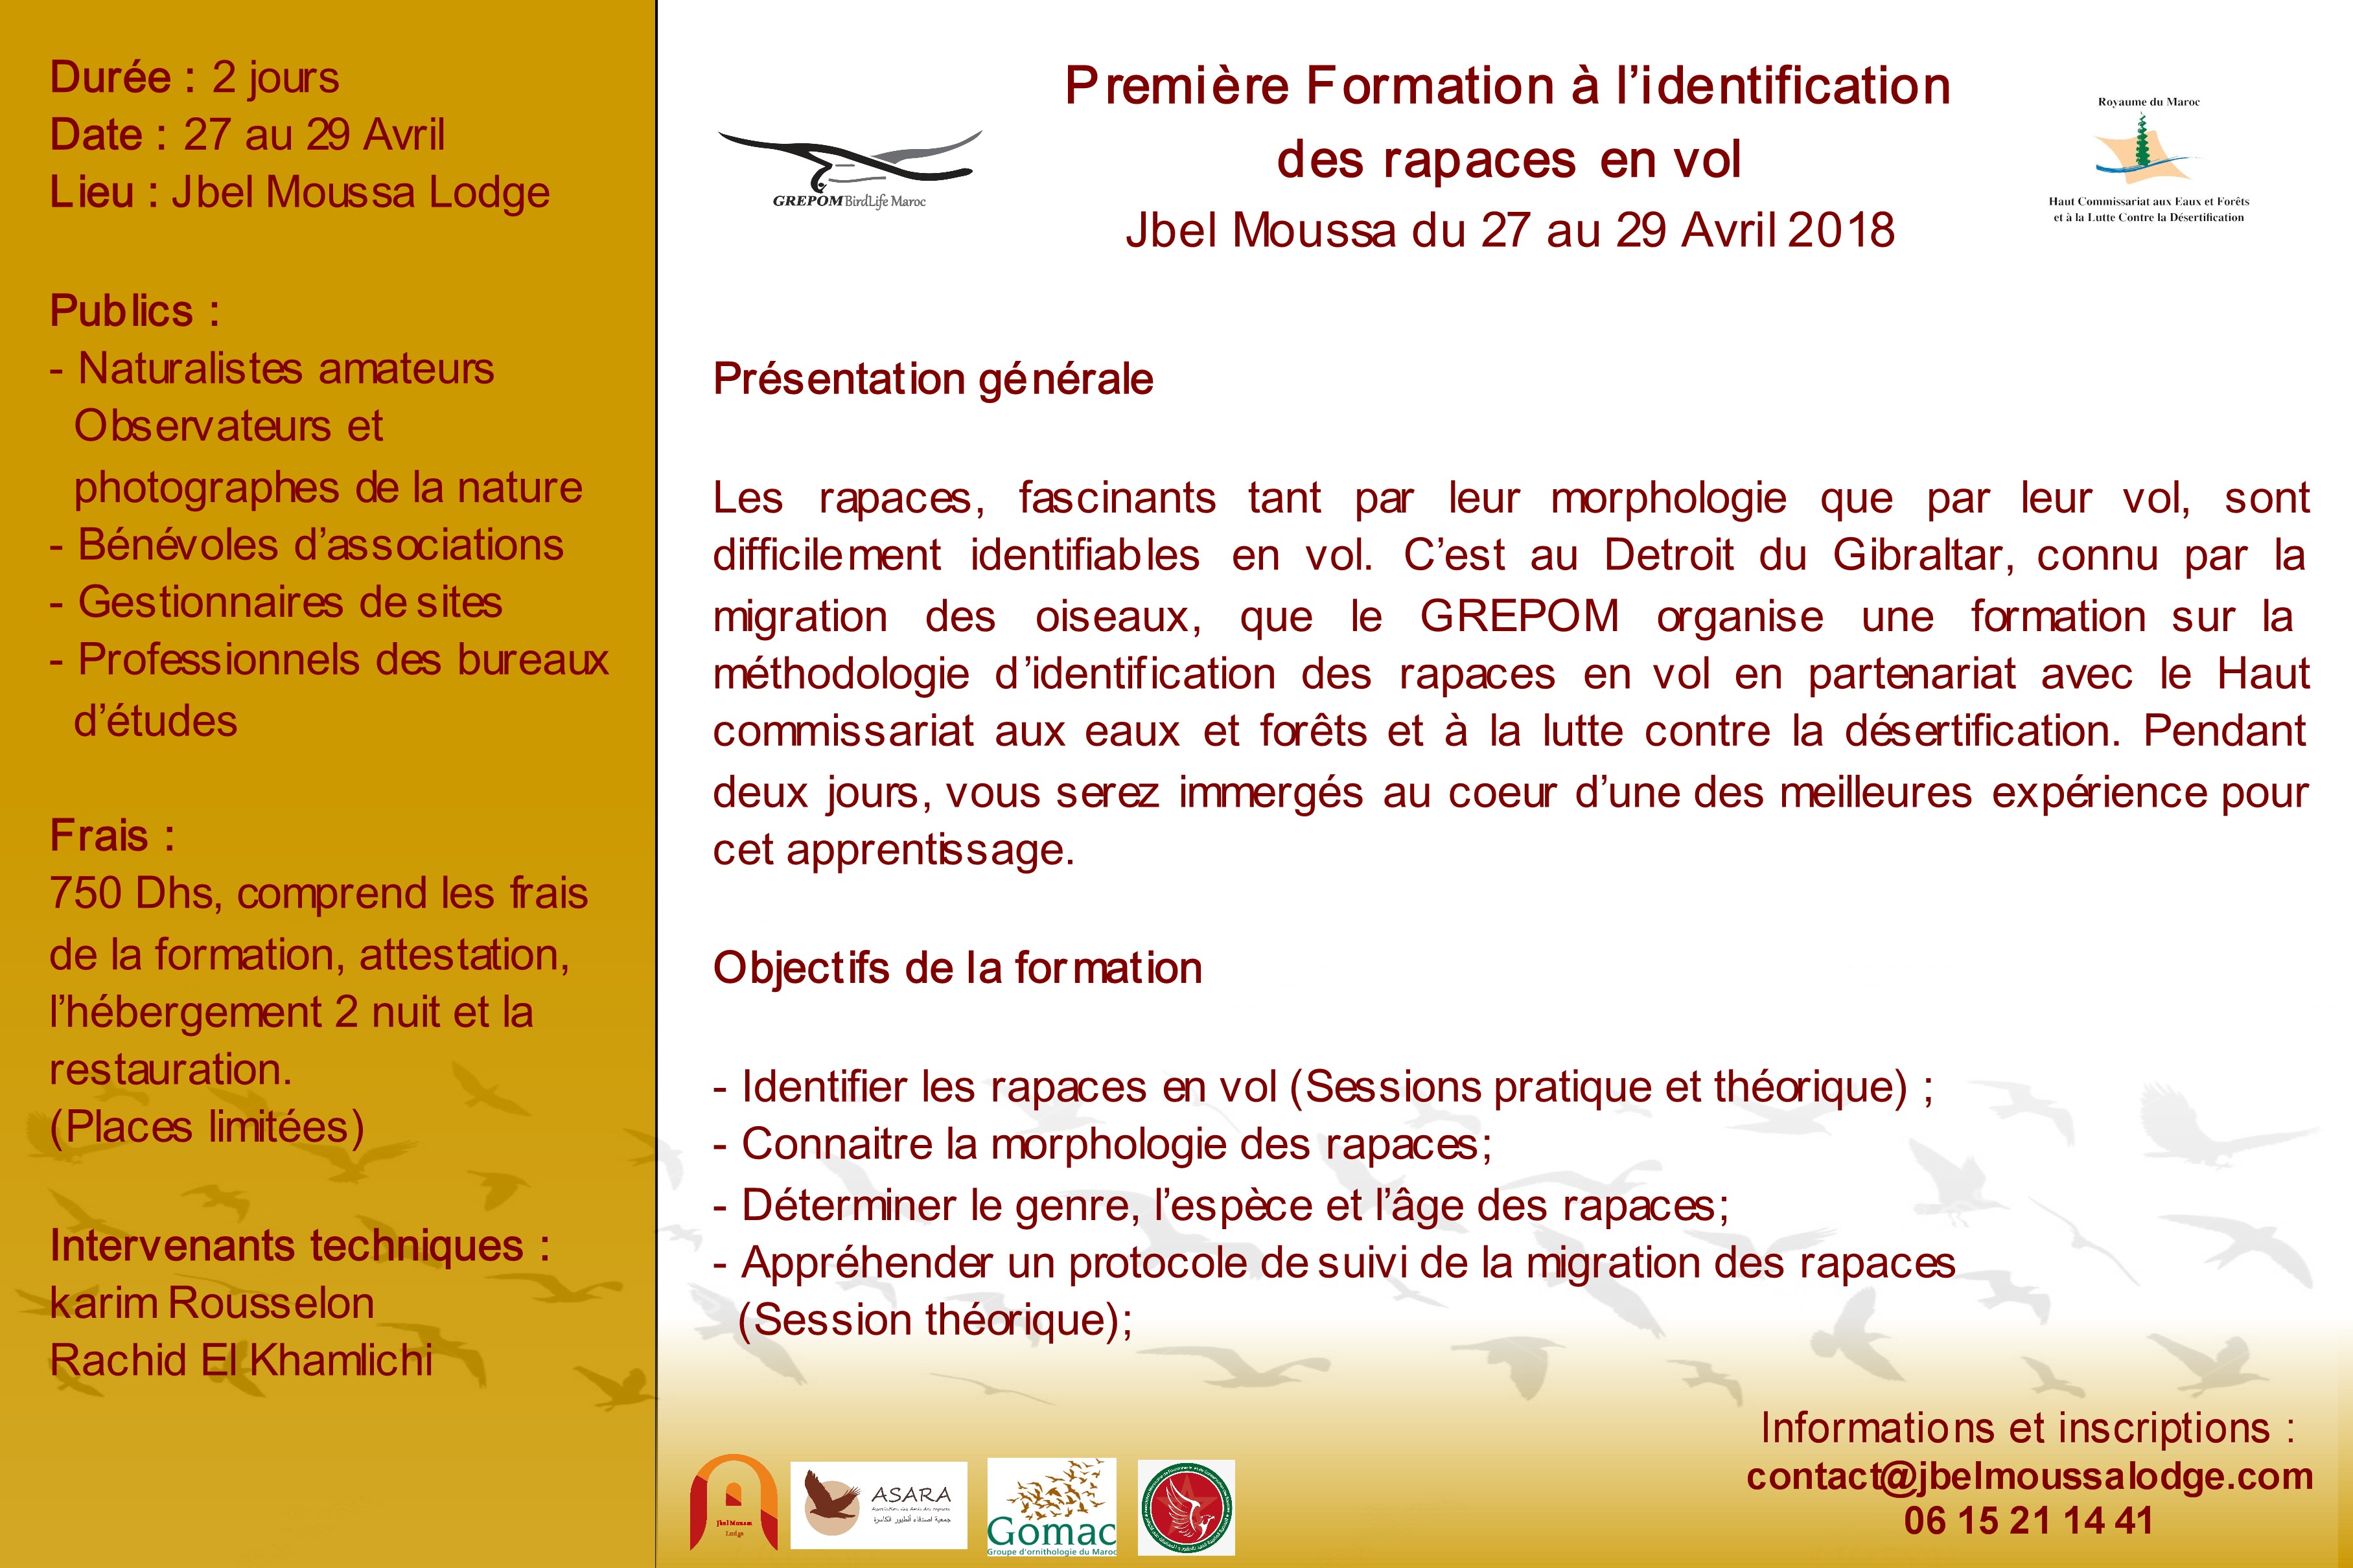 Assemblée Générale du GREPOM/Birdlife Maroc du 03/03/18